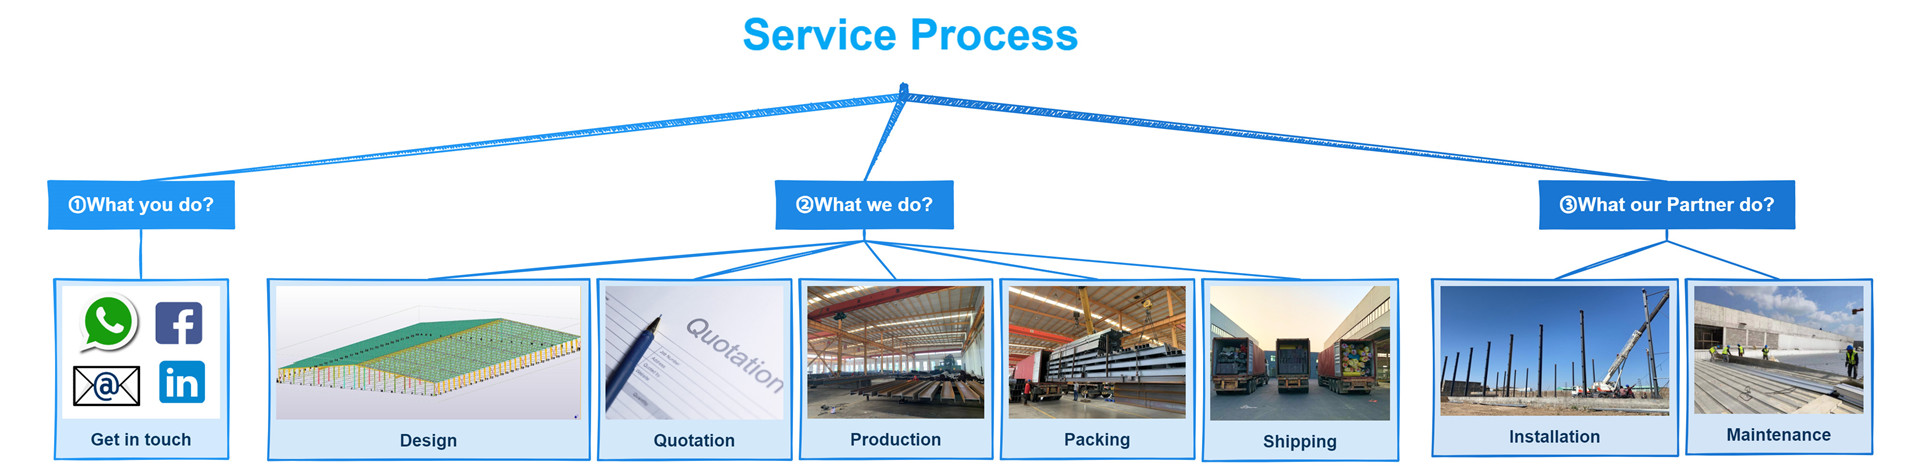 Service Process 2